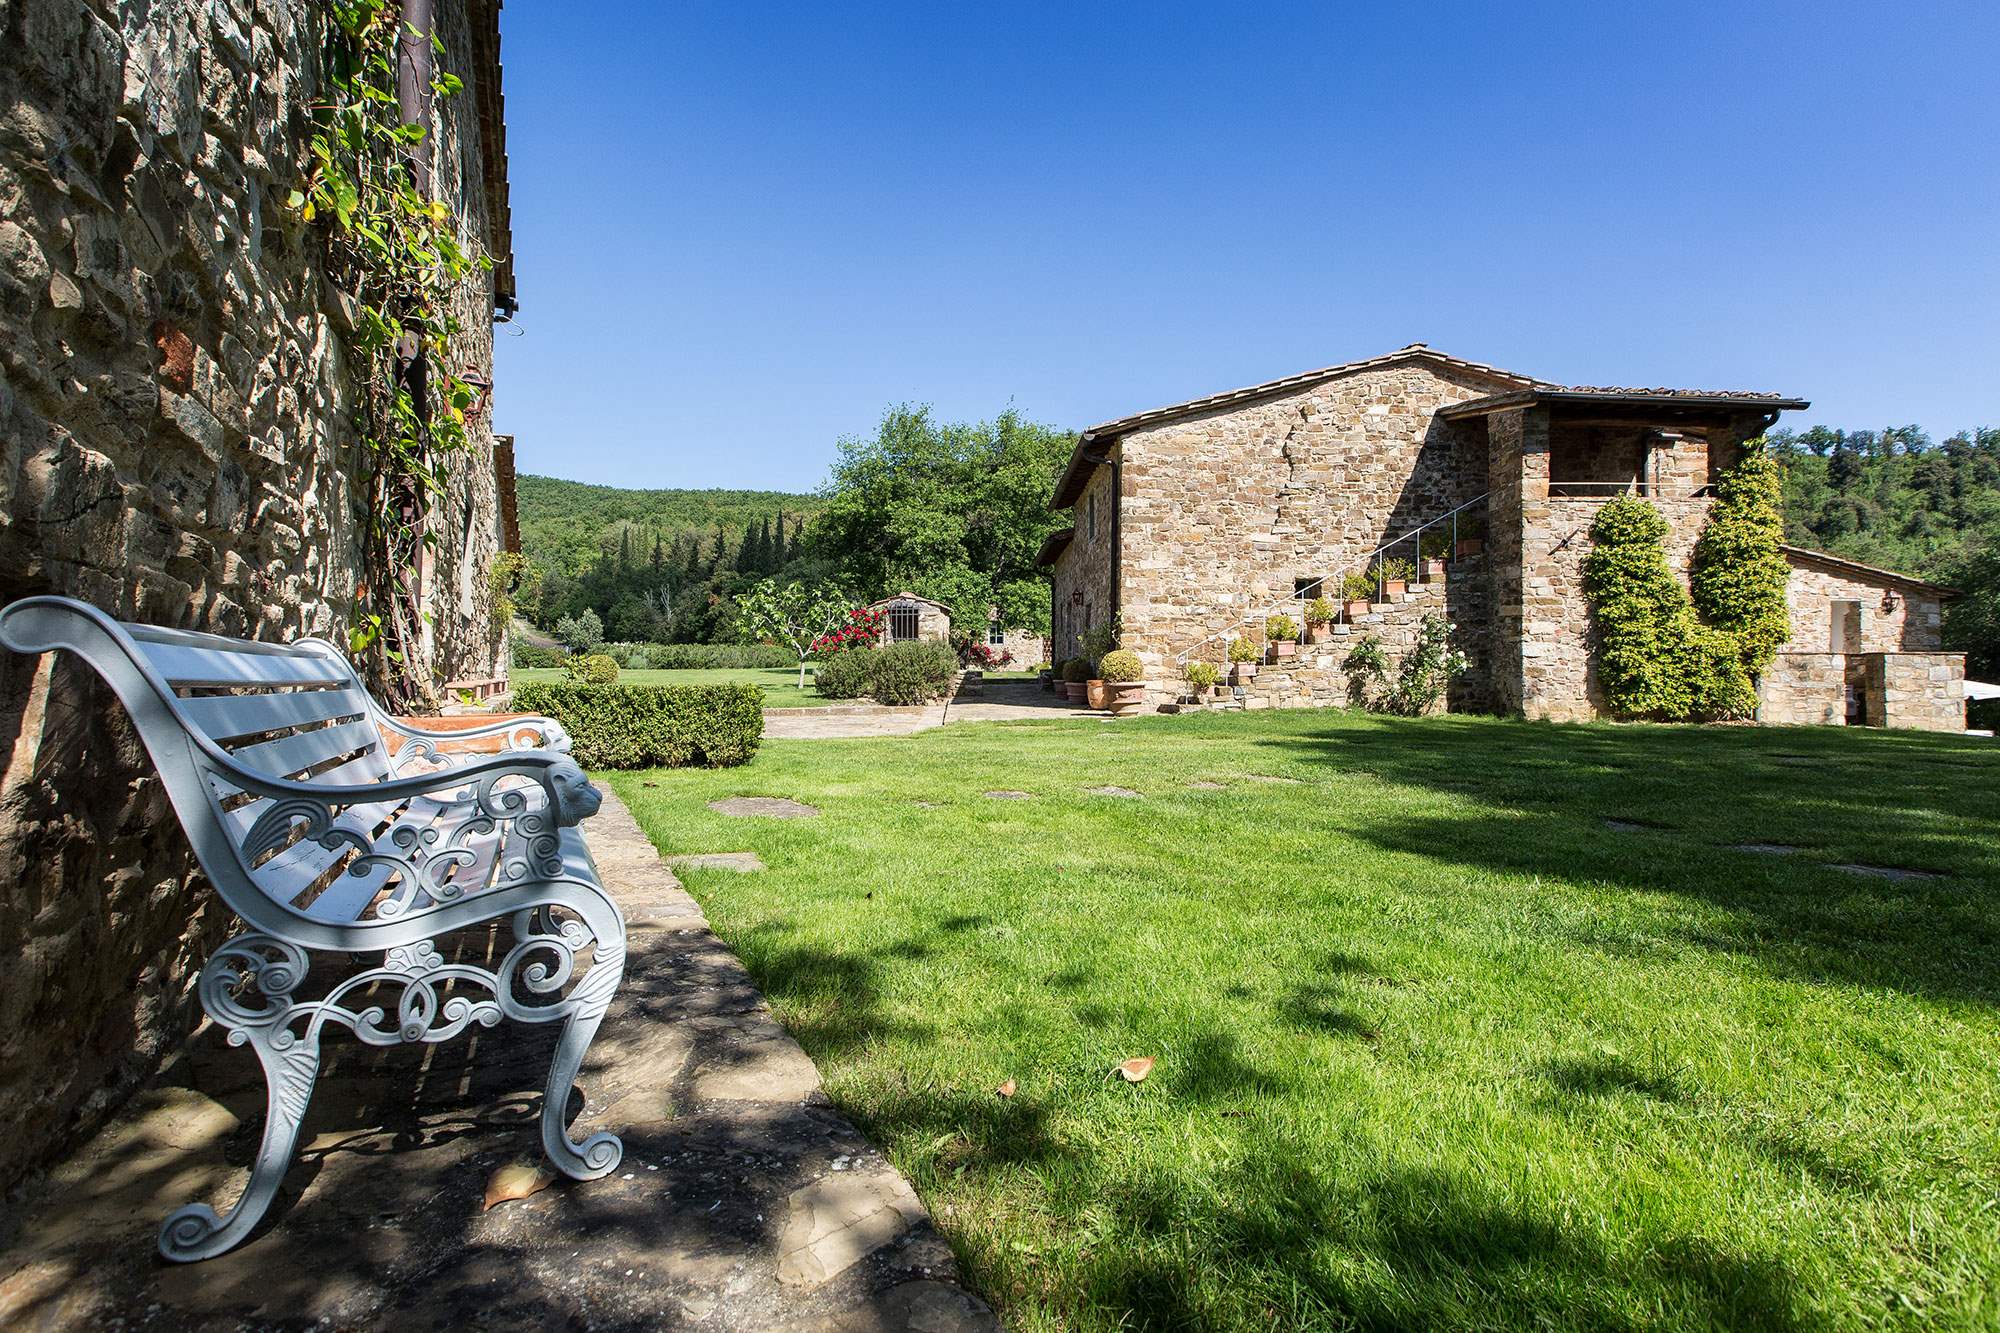 Villa Grande, Main Villa & Cottage, up to 16 persons rate, 8 bedroom villa in Chianti & Countryside, Tuscany Photo #41